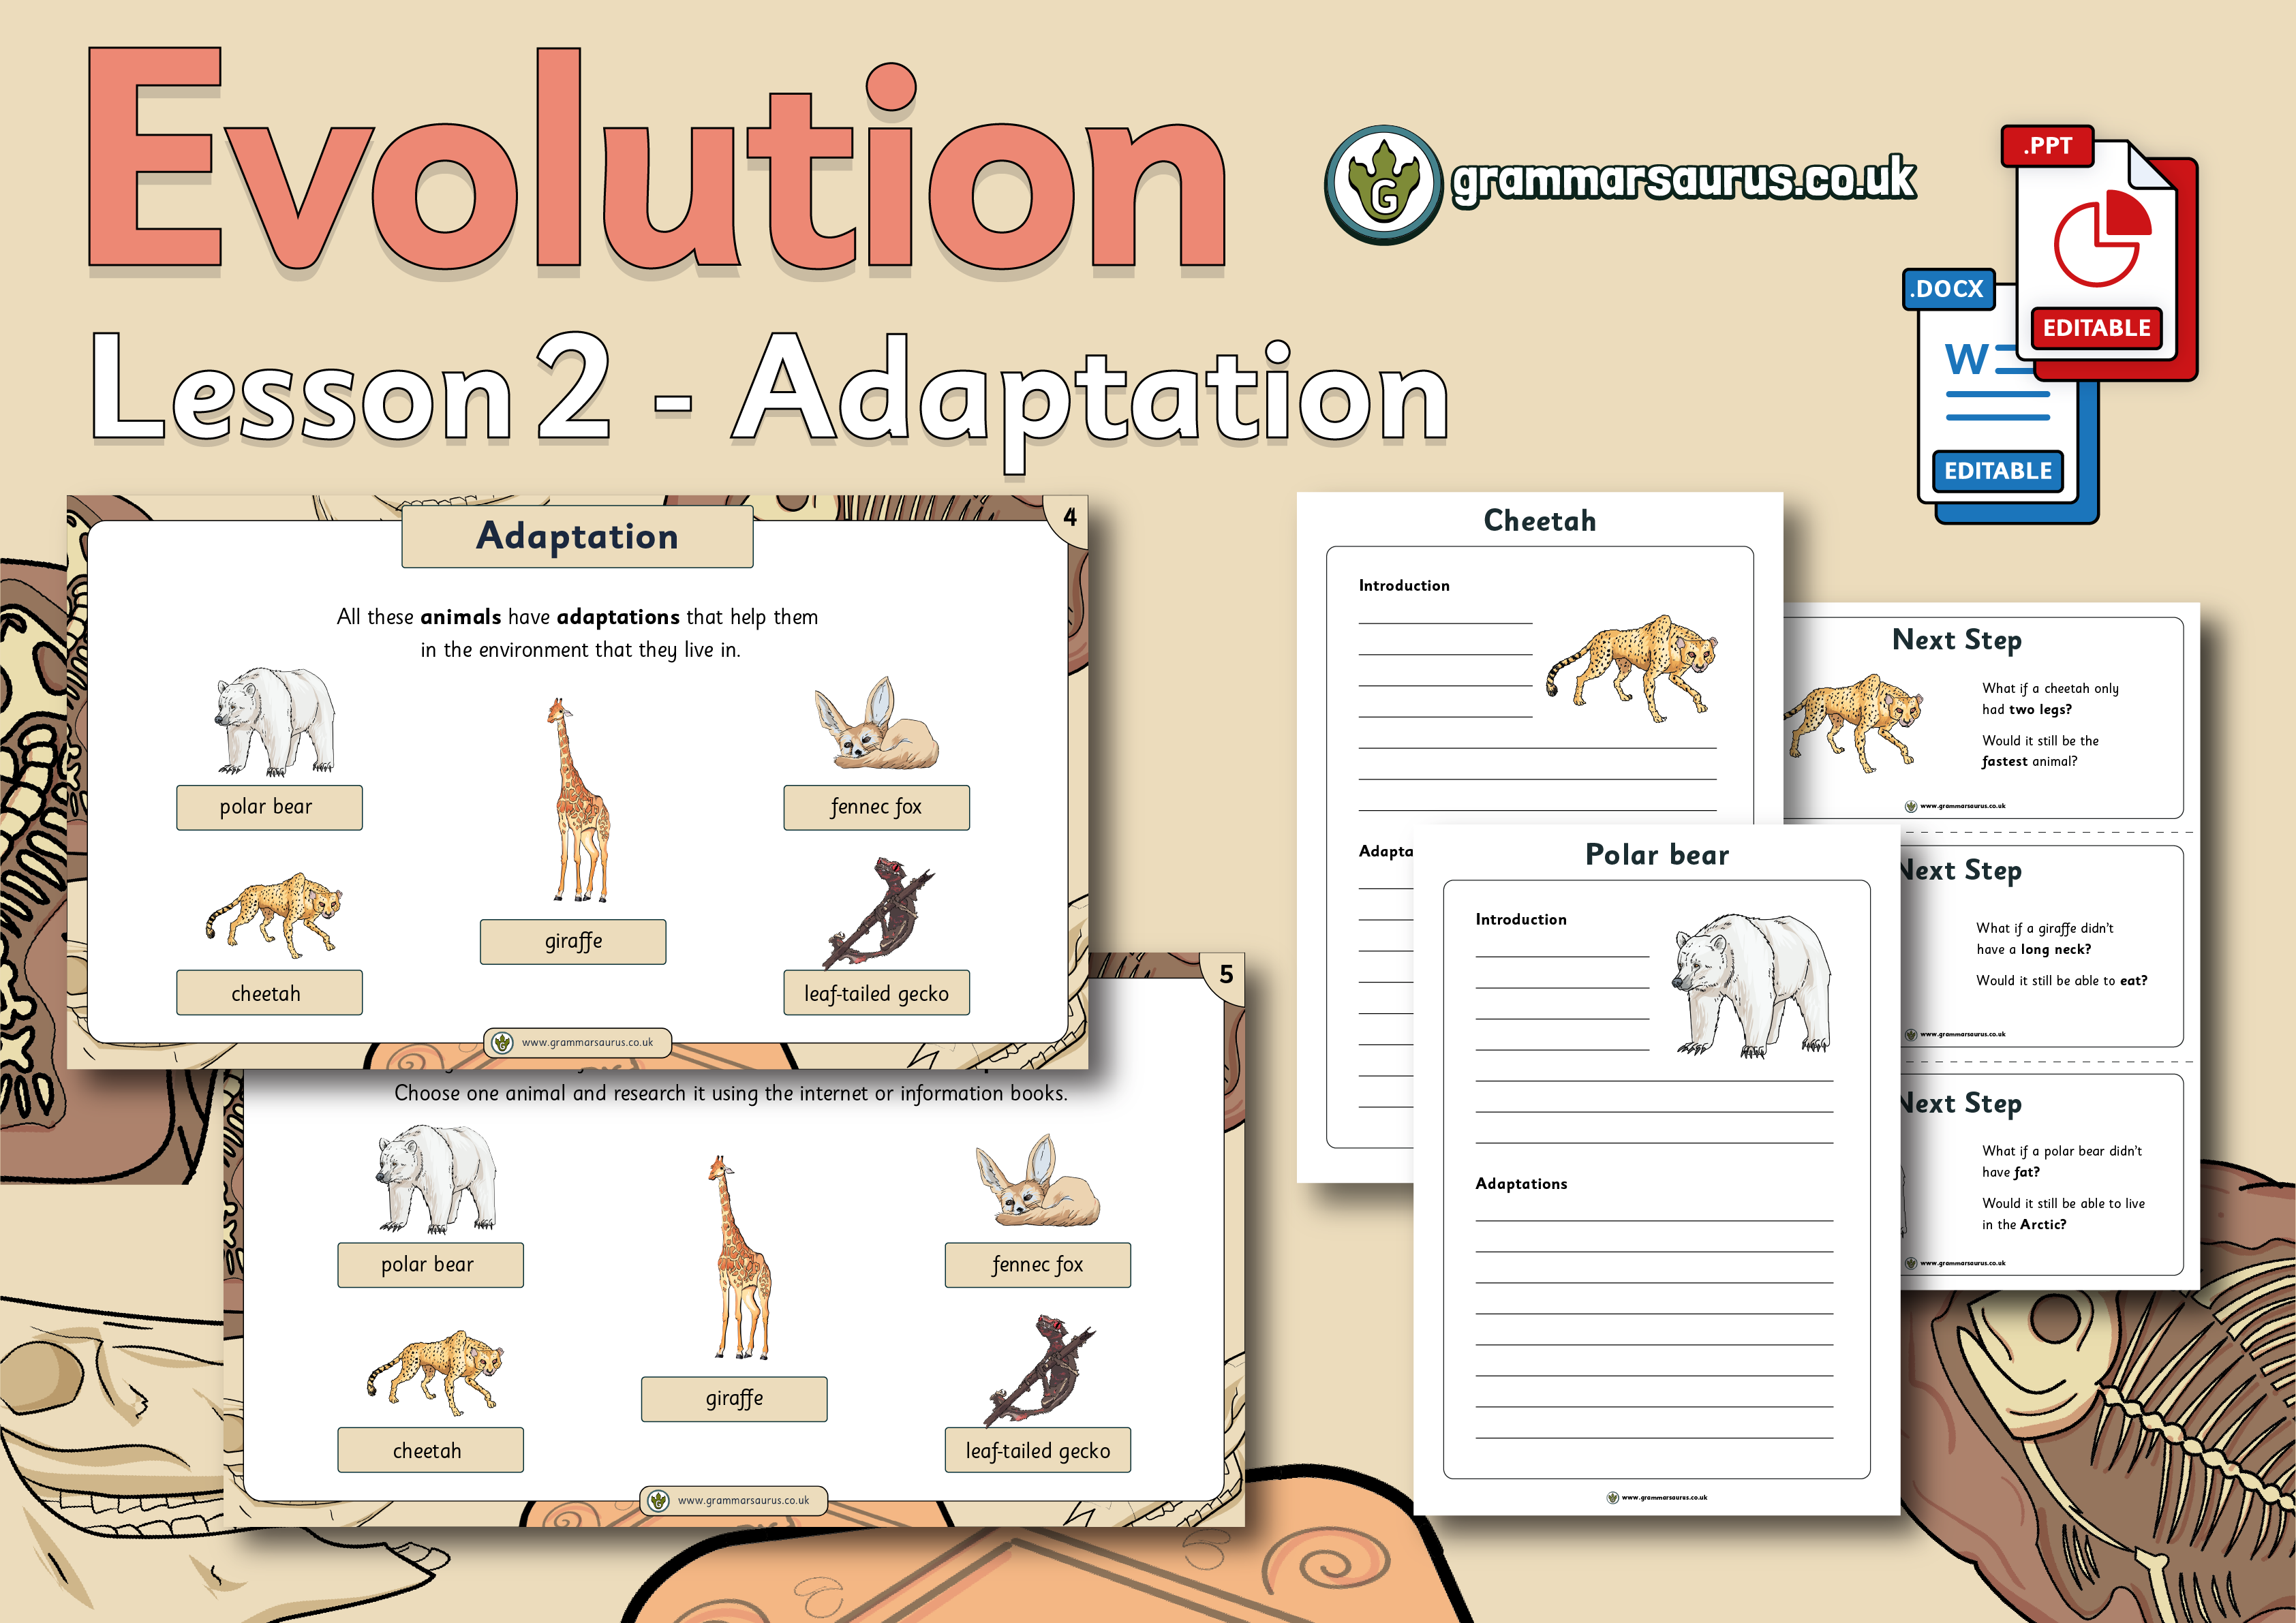 Year 6 Science - Evolution - Adaptation - Lesson 2 - Grammarsaurus